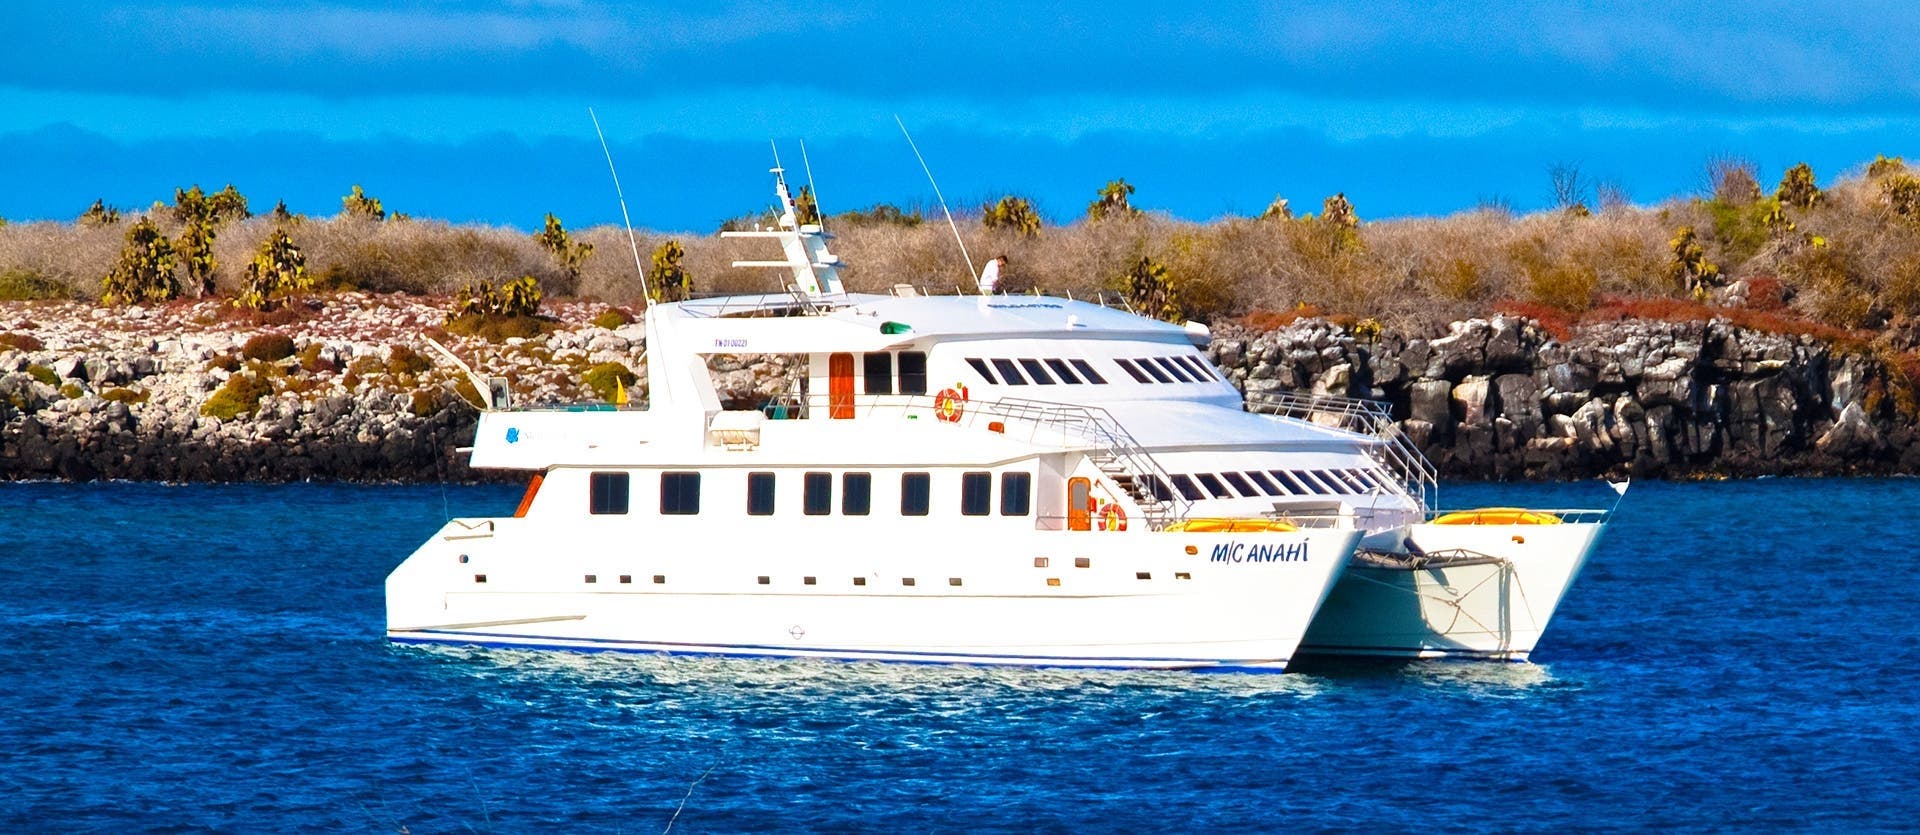 Galapagos Cruise & Wild Amazon Immersion